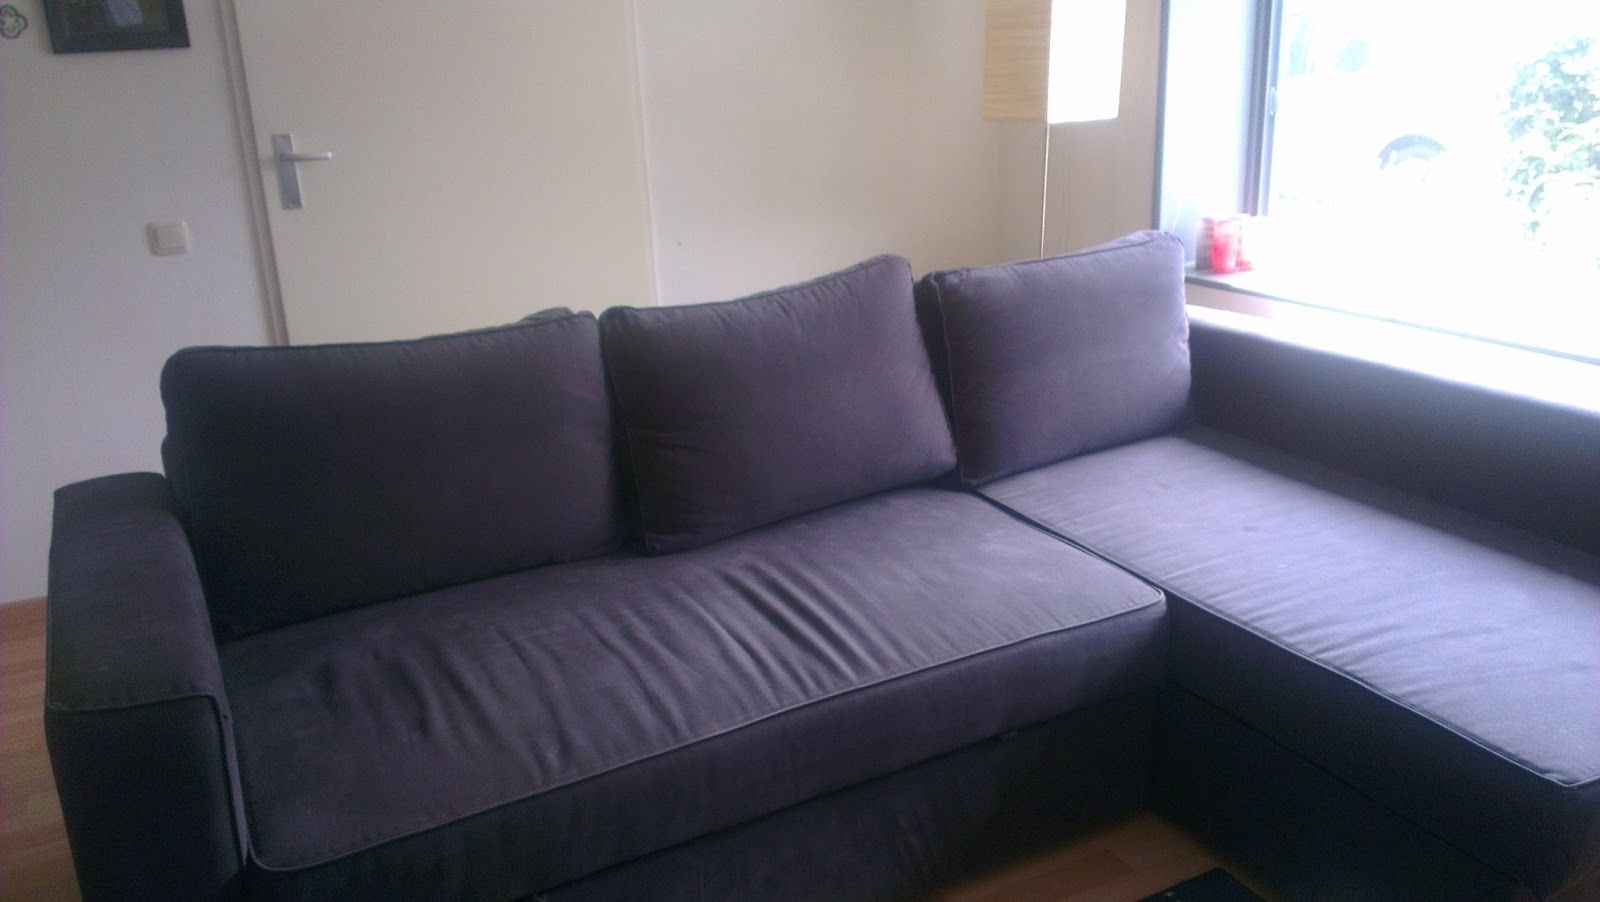 Ace The Adventure: Ikea Vrijdag: Manstad Bank/sofa Within Newest Manstad Sofas (View 4 of 15)